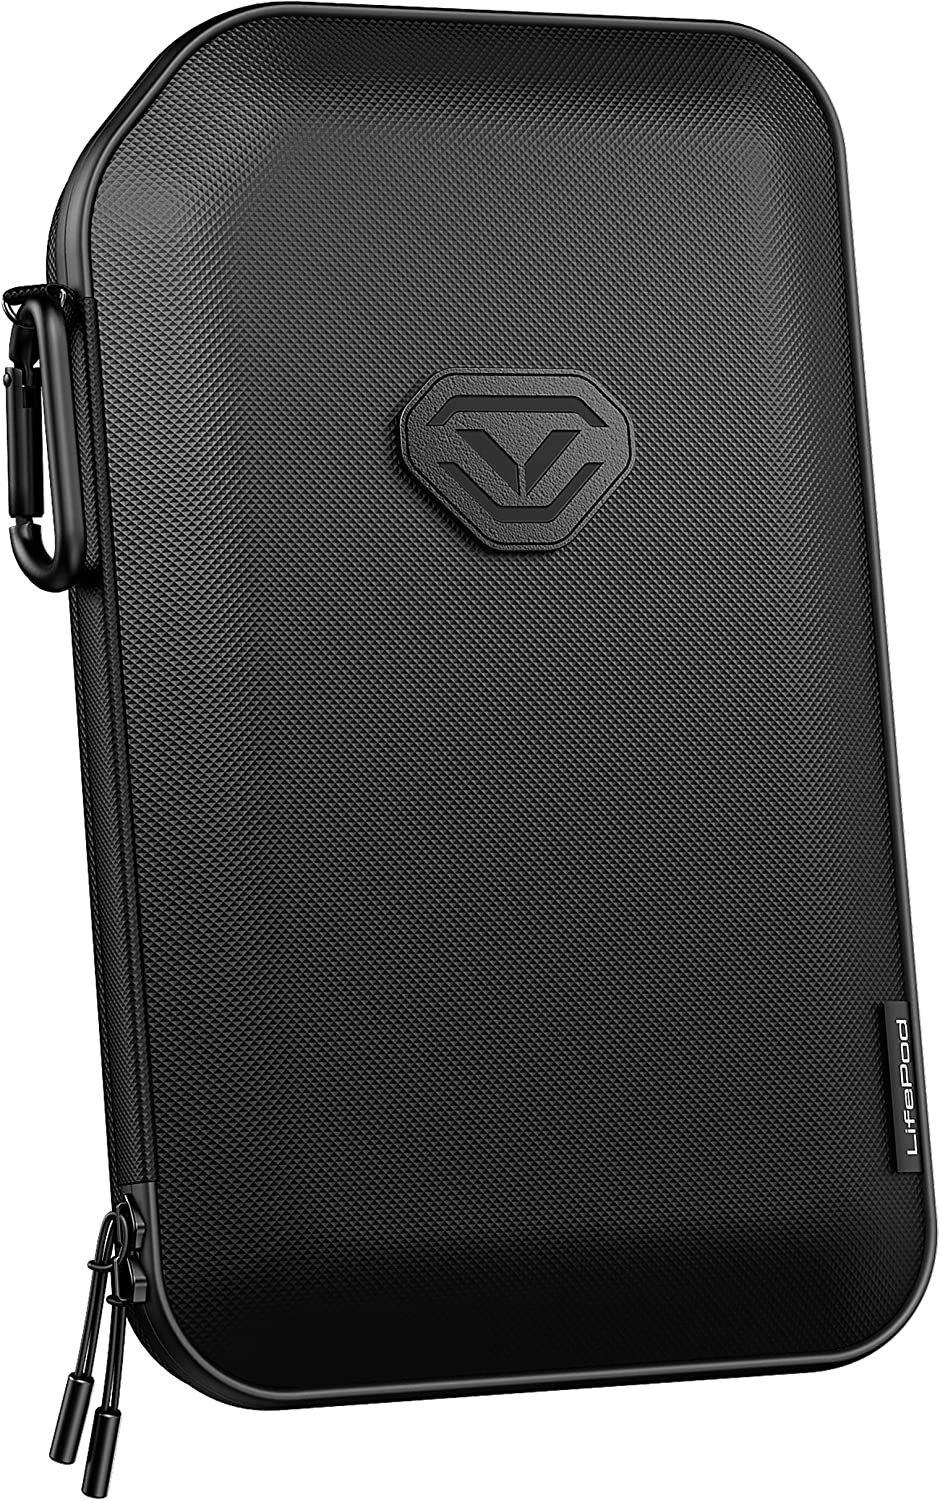 Vaultek - LifePod Zip Travel Case Slim Pouch